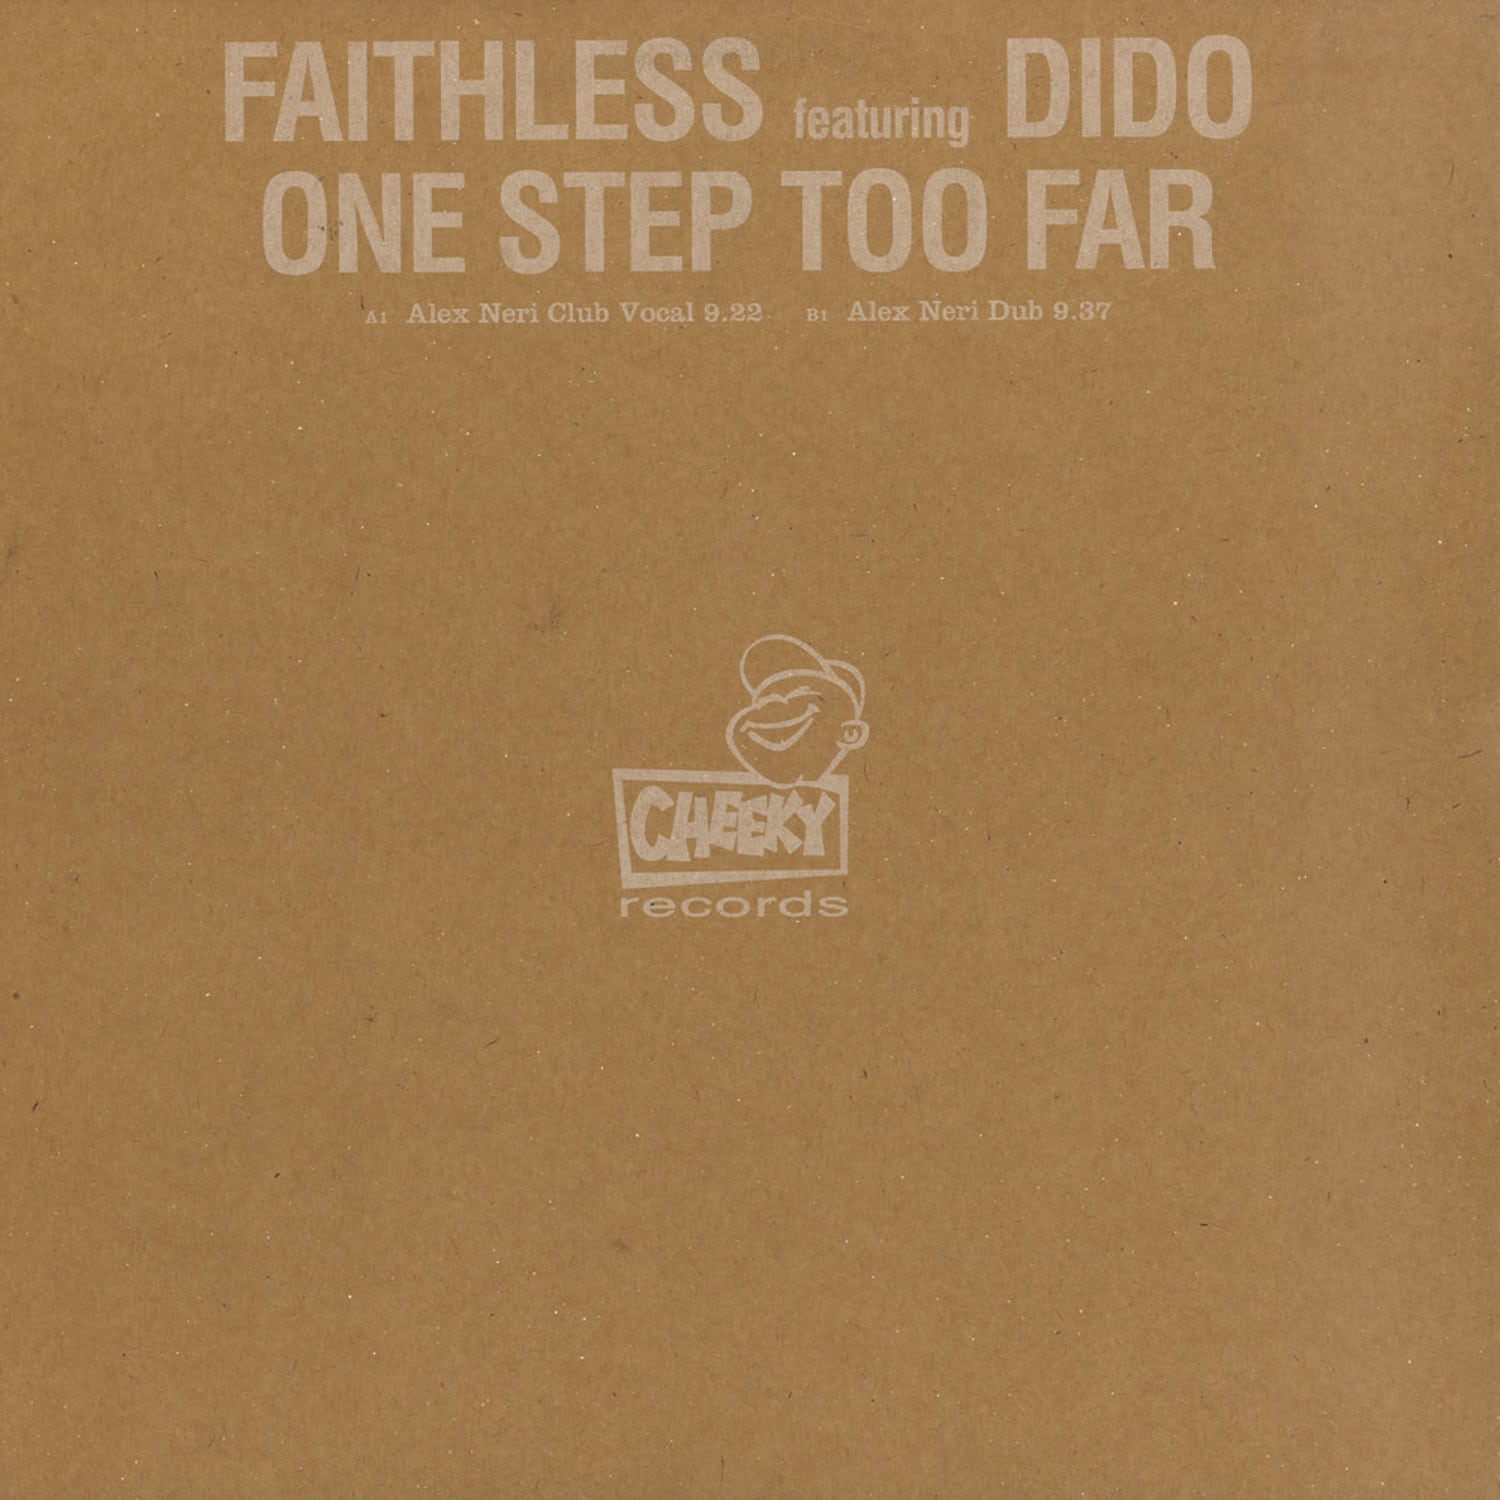 Faithless featuring Dido - ONE STEP TOO FAR